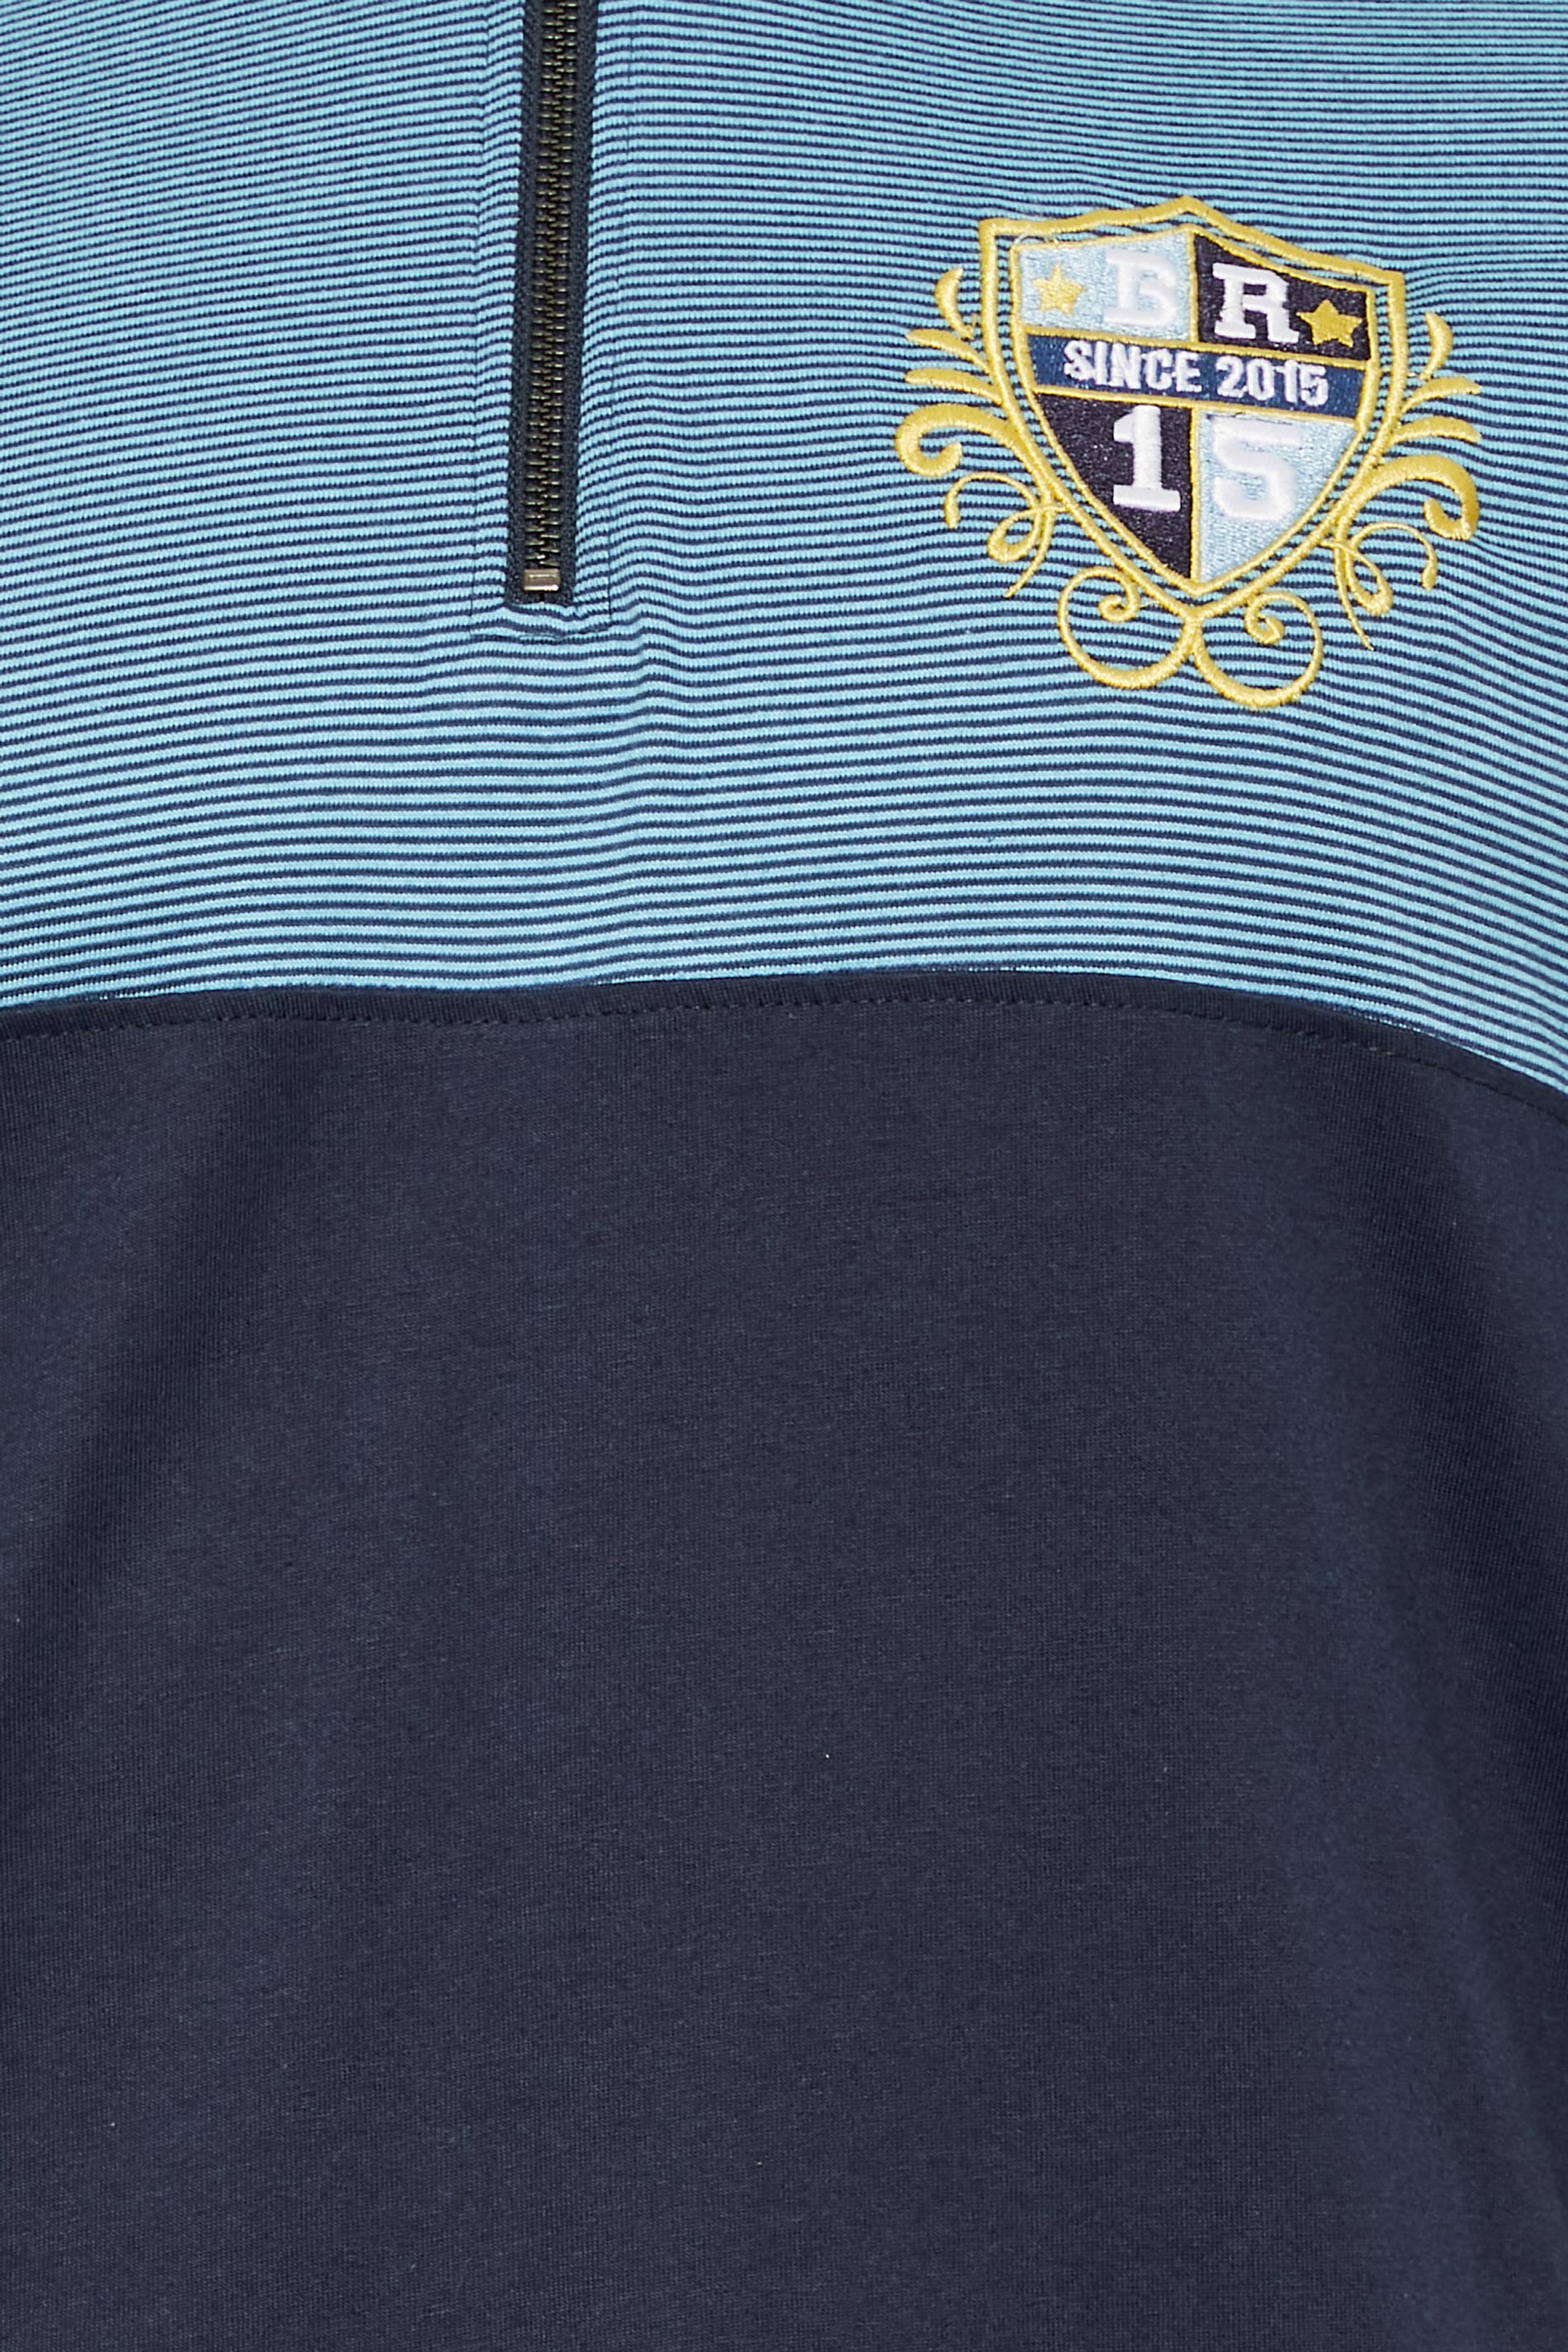 BadRhino Big & Tall Blue Crest Zip Polo Shirt | BadRhino  2